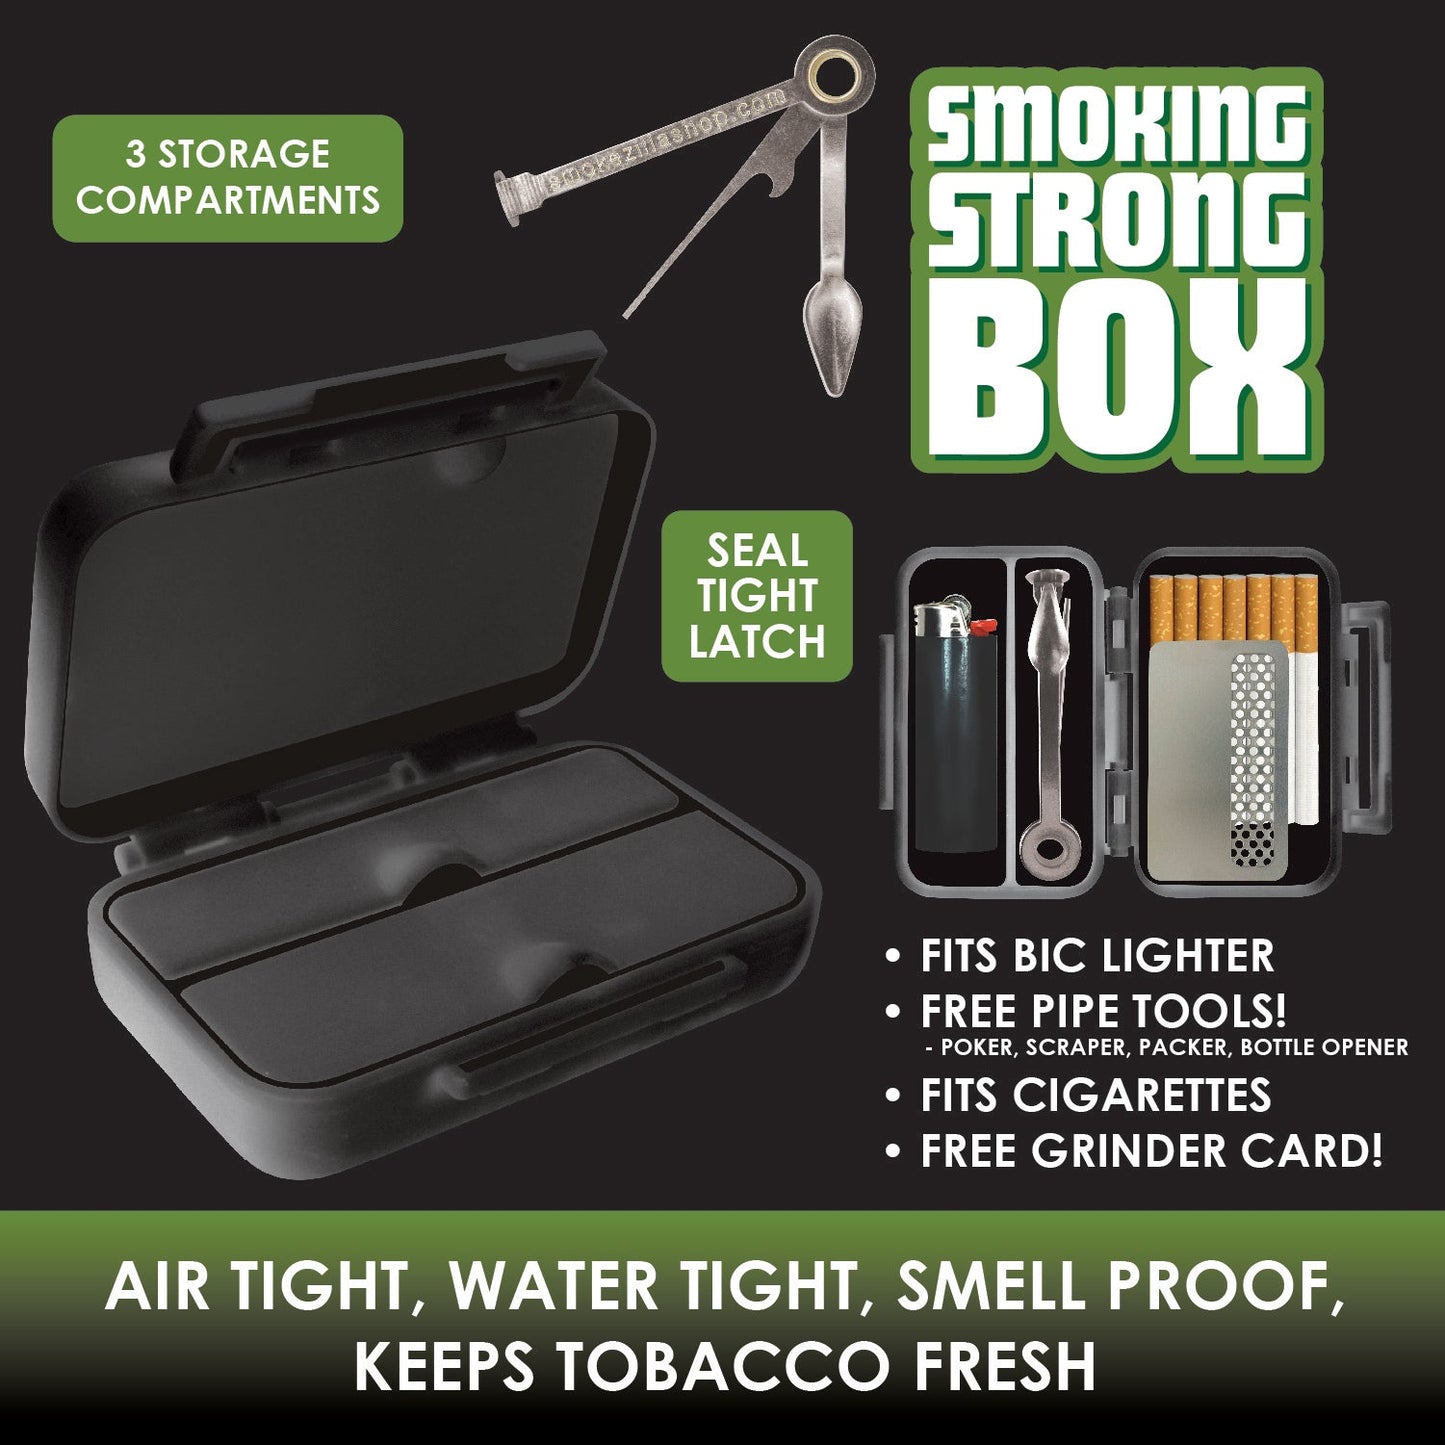 ITEM NUMBER 022275 SMOKING STRONG BOX 8 PIECES PER DISPLAY